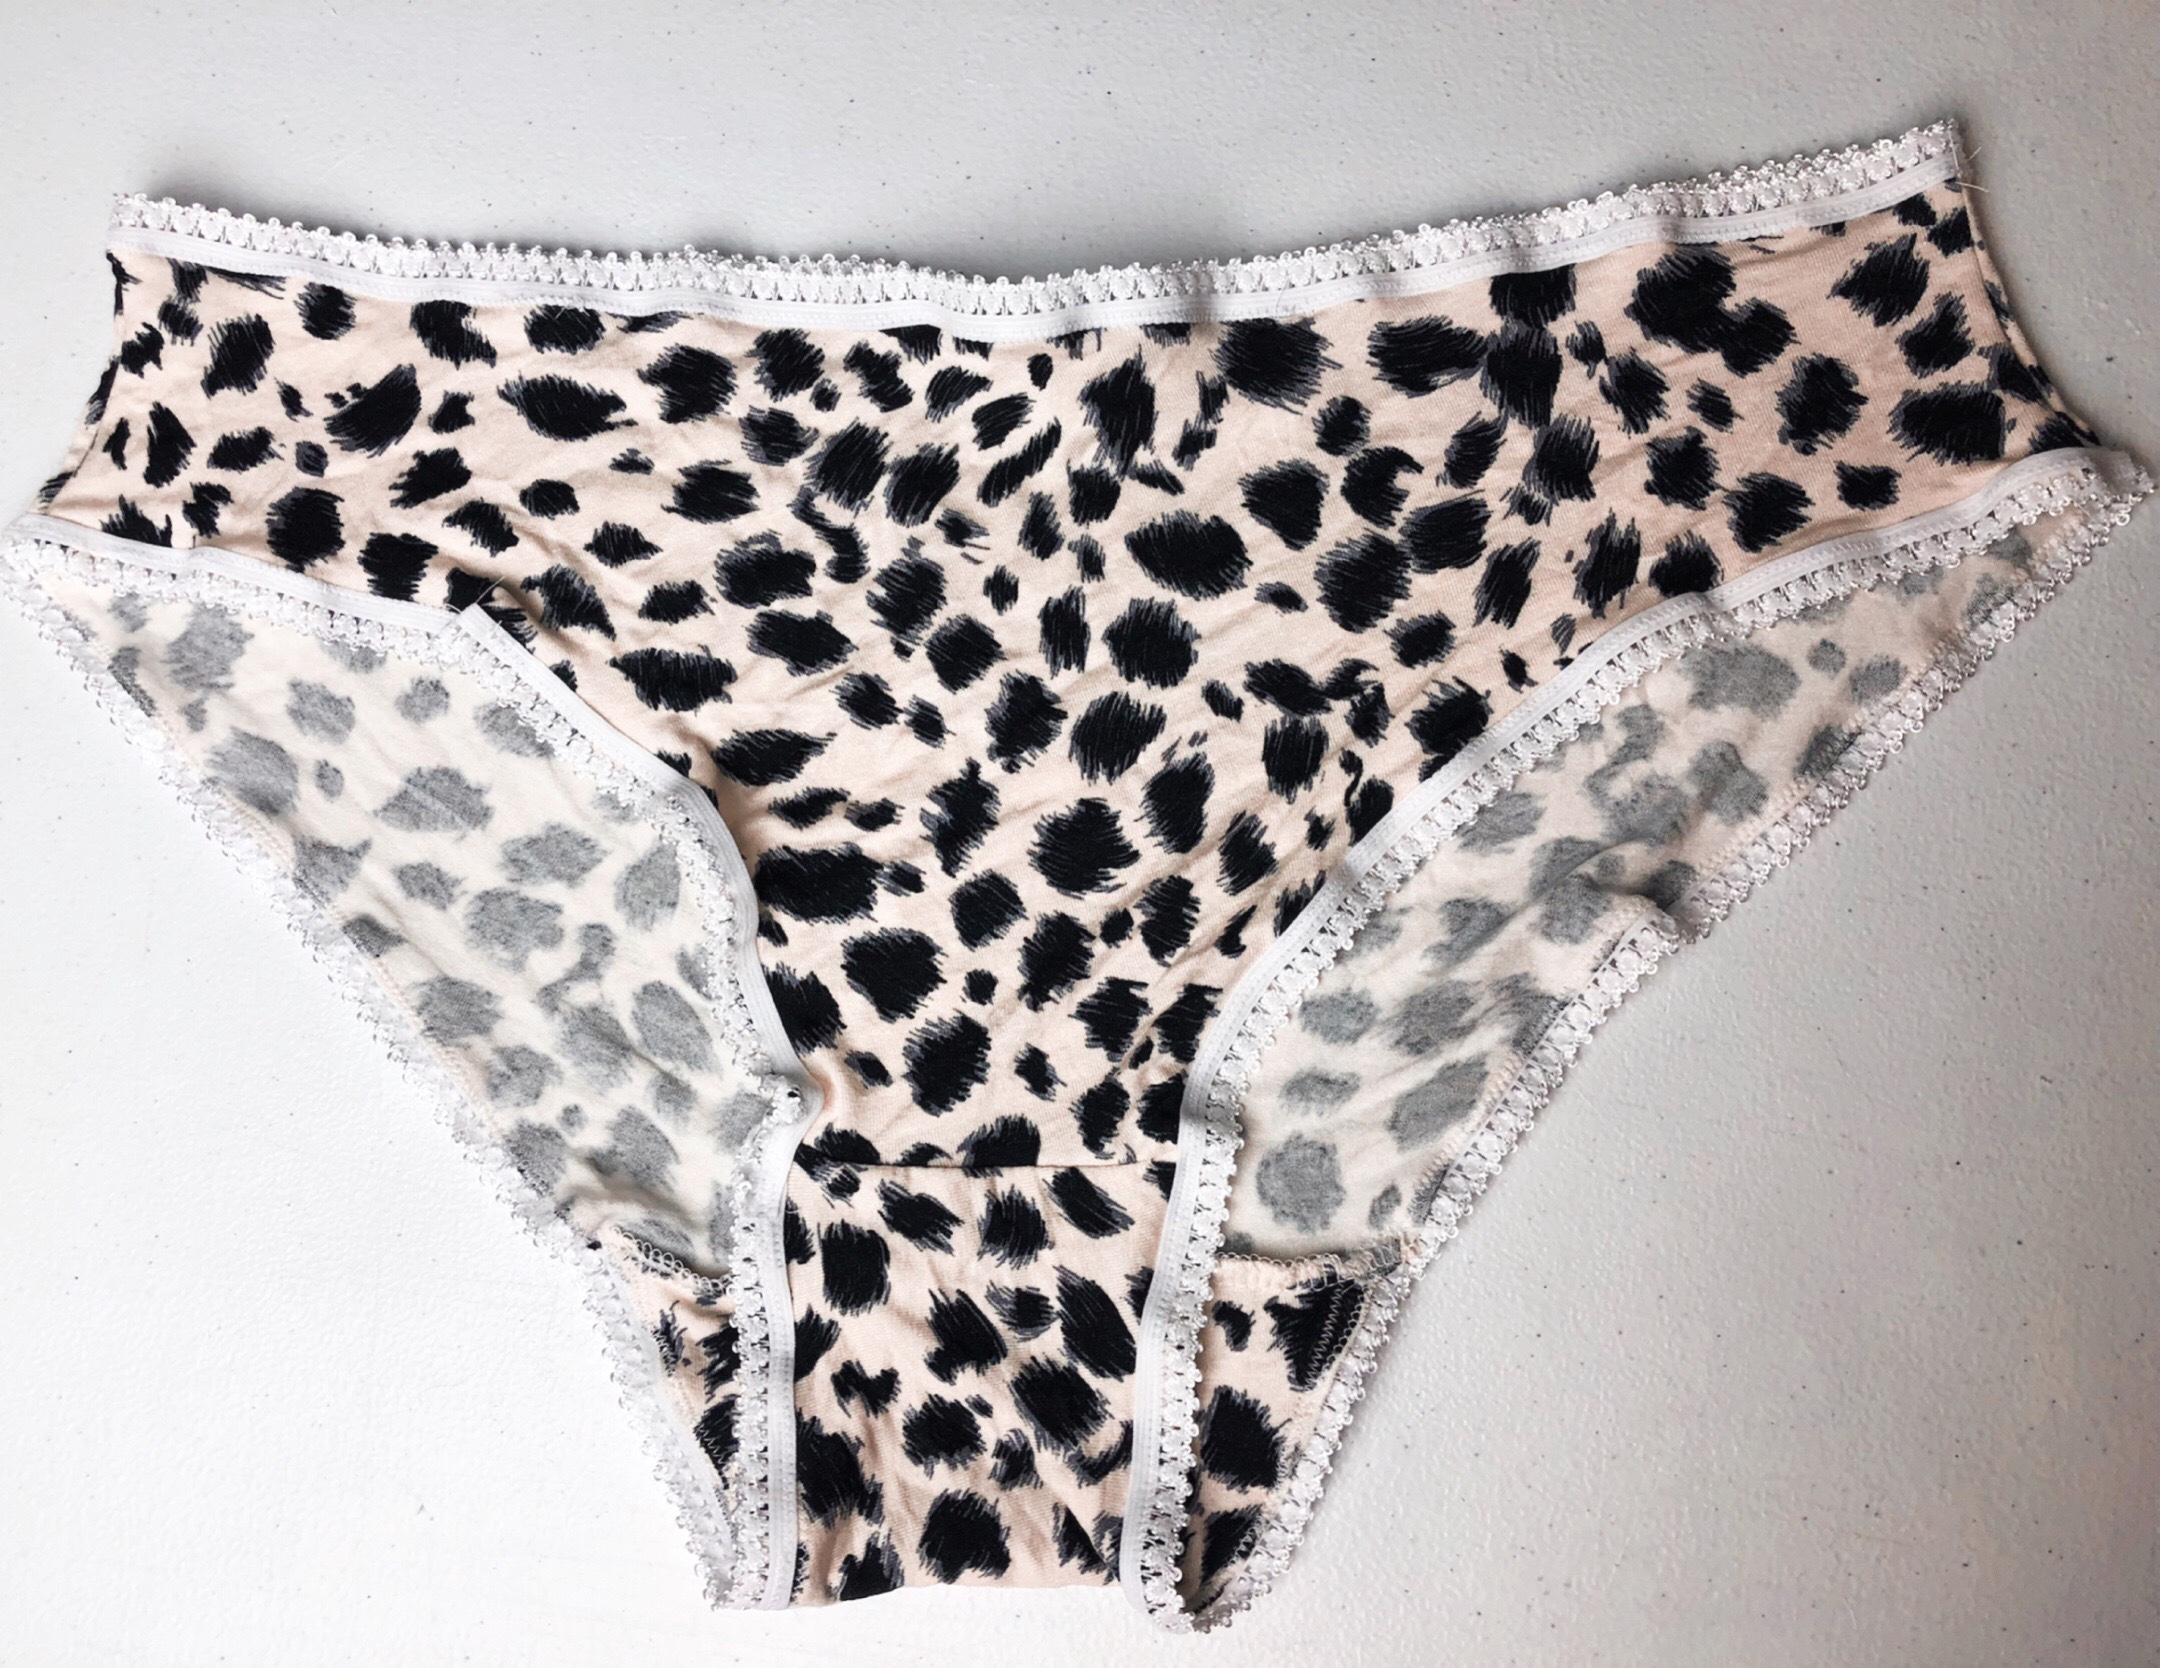 Free pattern: How to make your own panties! – RAVEN MAUREEN